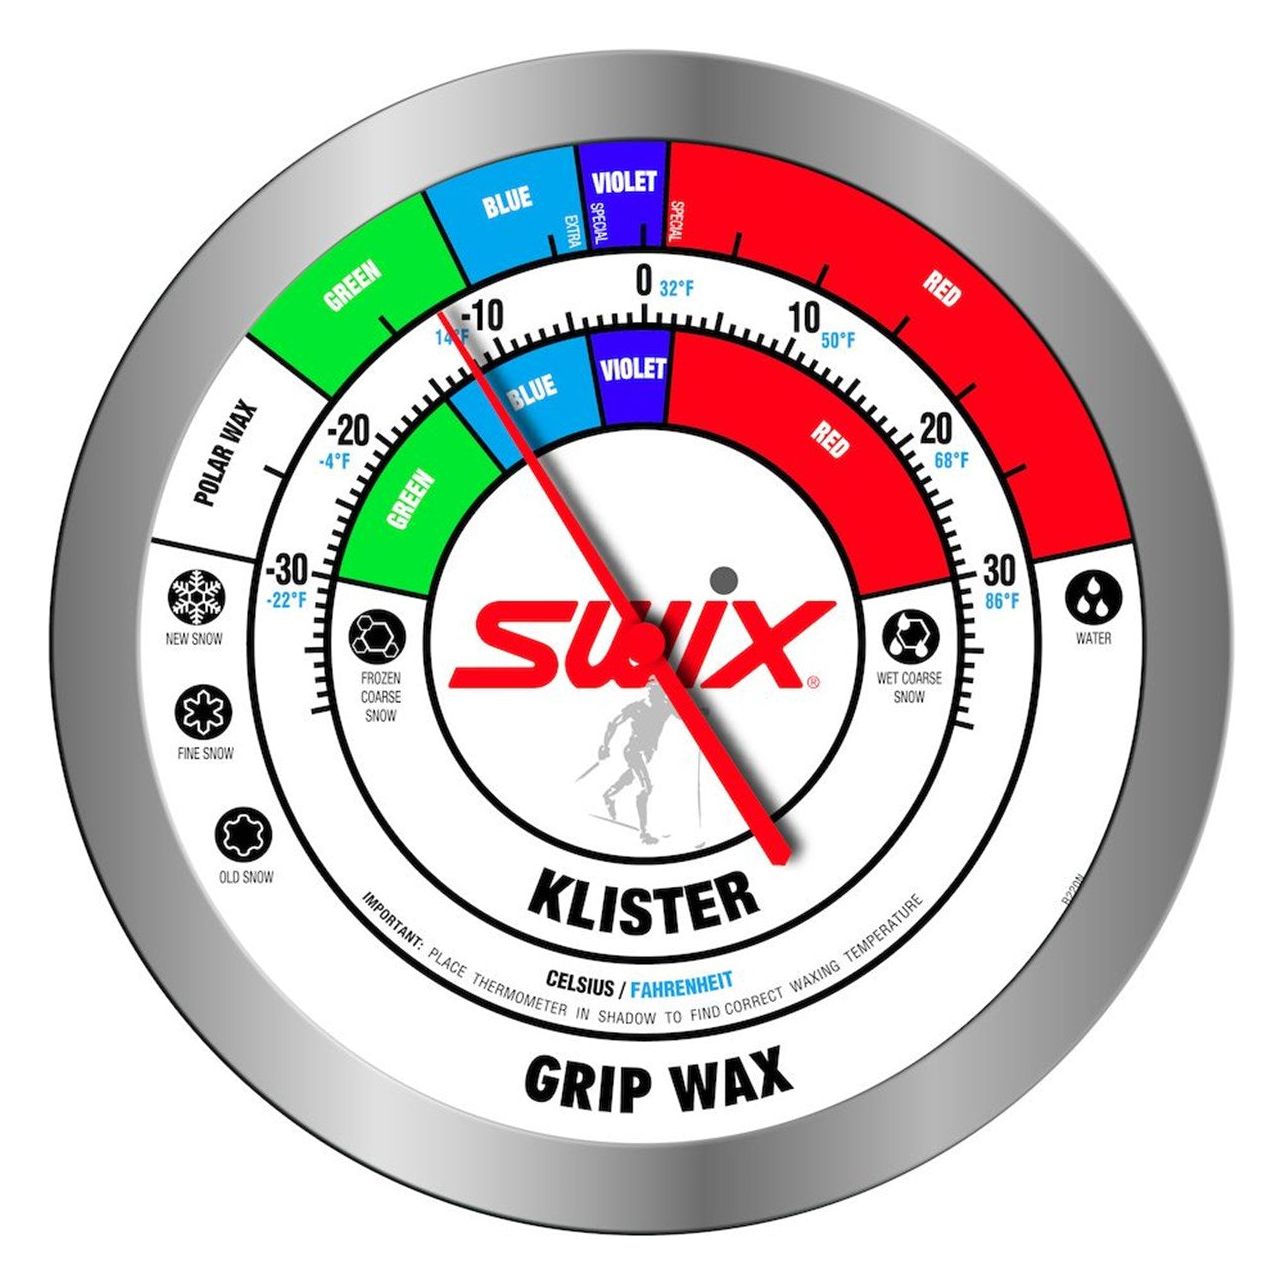 Swix Nordic Round Wall Kick Wax Thermometer